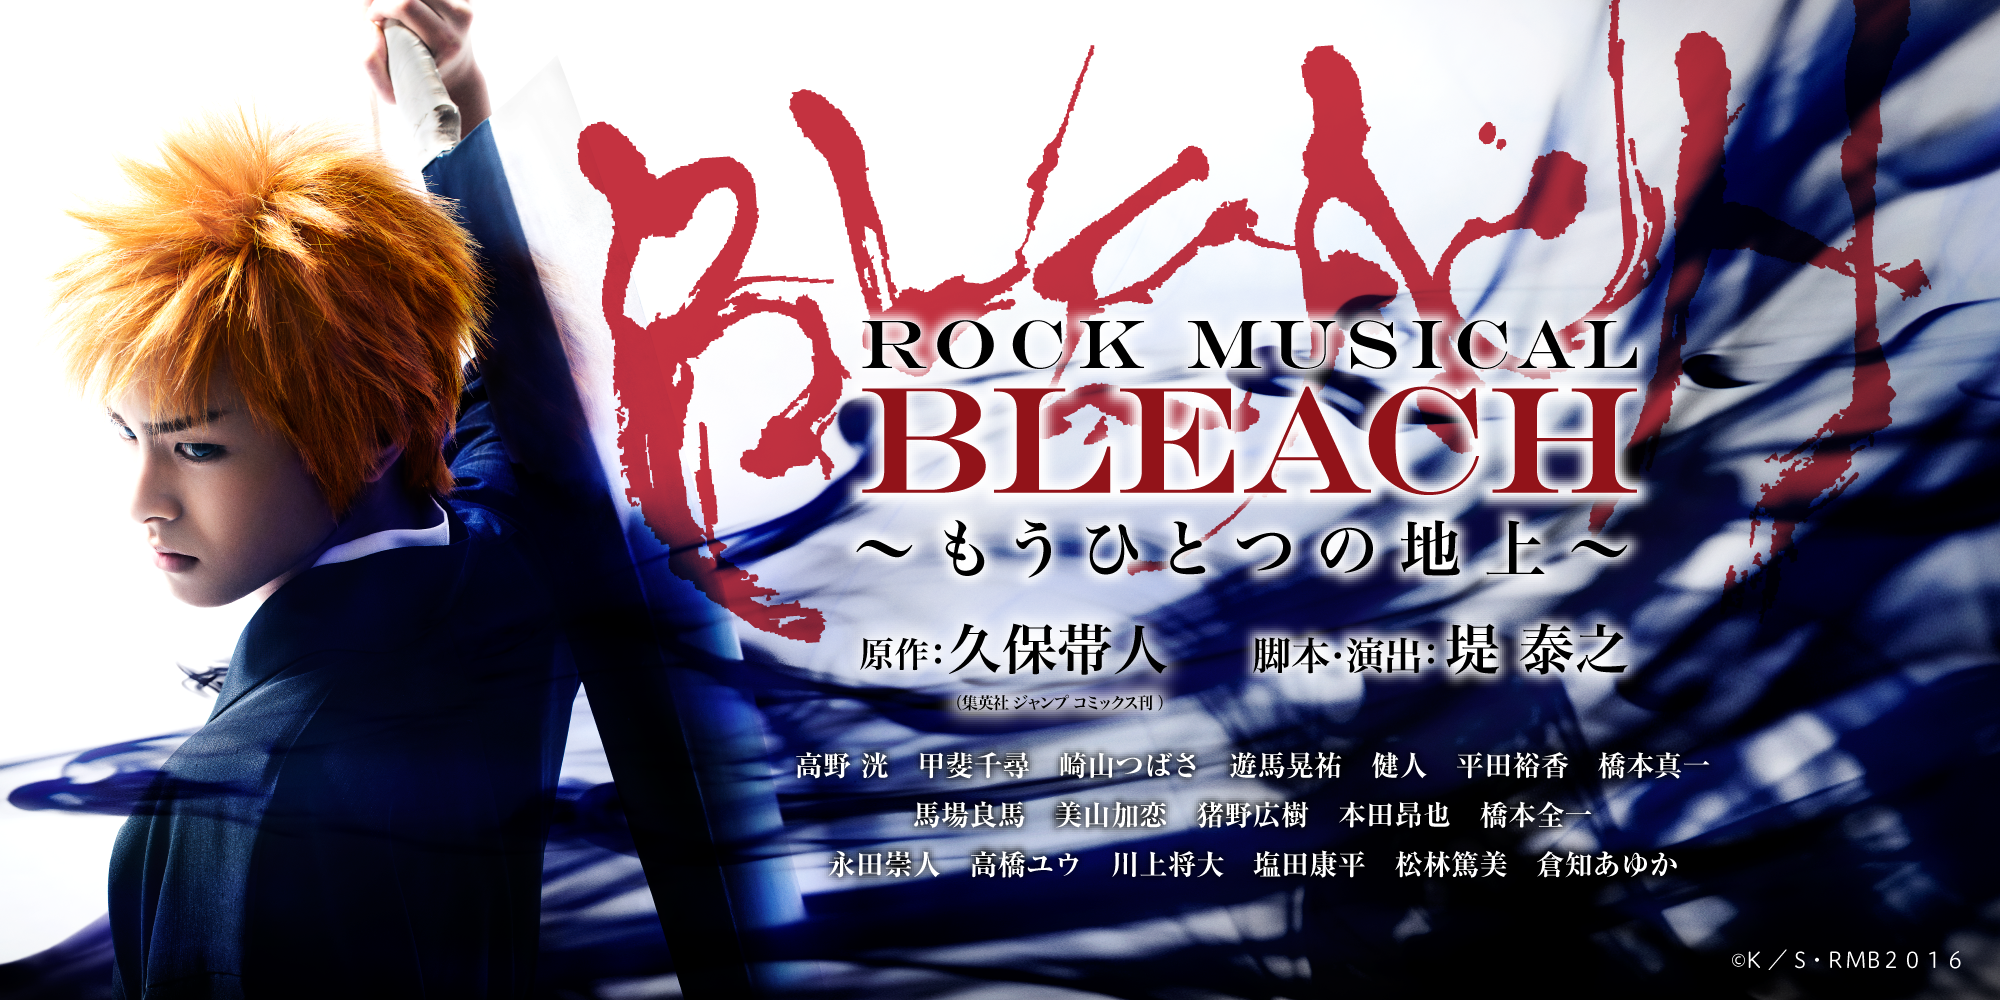 ROCK MUSICAL BLEACH もうひとつの地上 blu-ray boxCDDVD - ミュージック